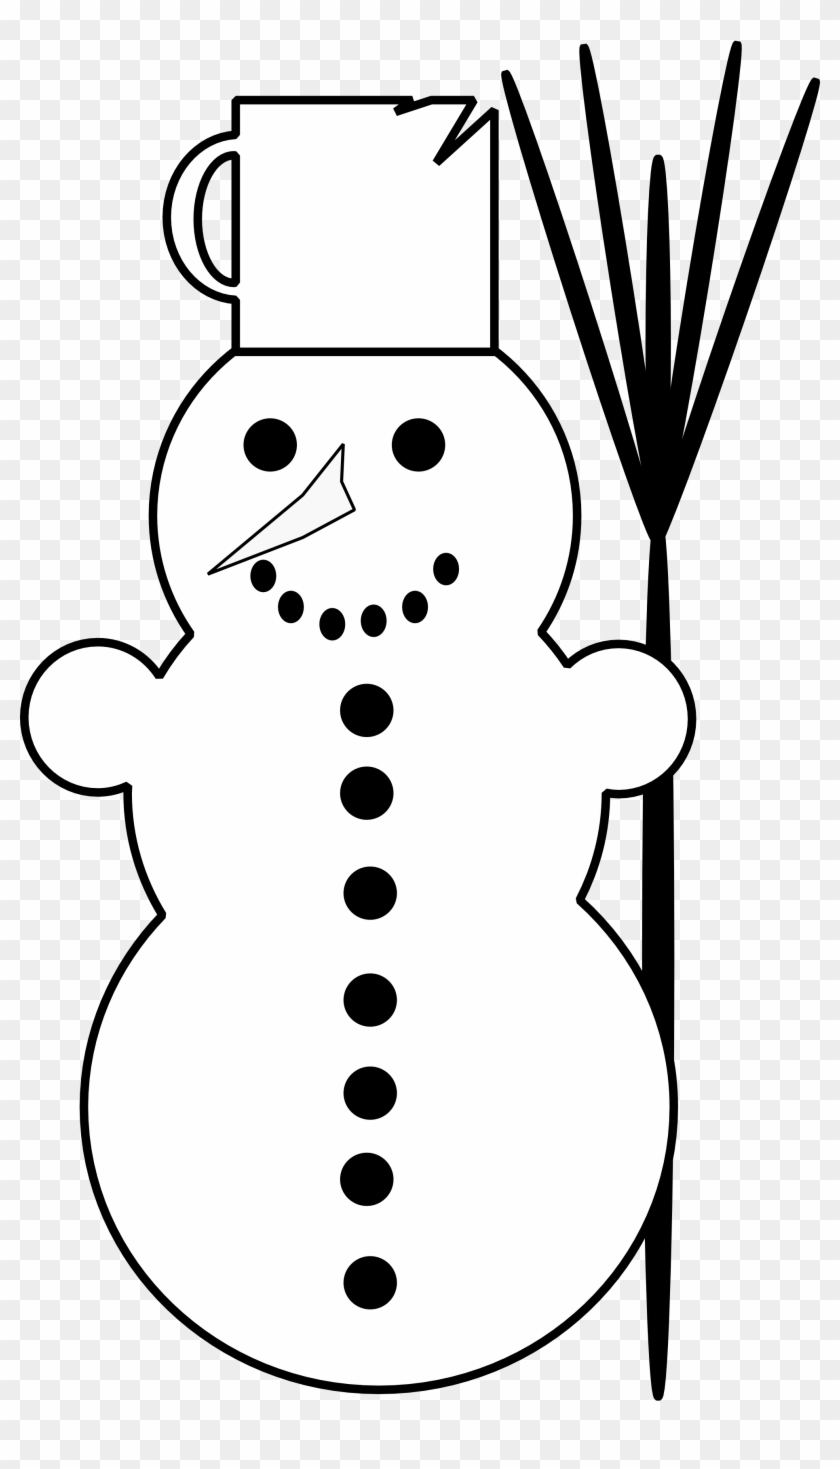 Snowman 2 Black White Line Art Christmas Xmas Coloring - Snowman 2 Black White Line Art Christmas Xmas Coloring #1585471